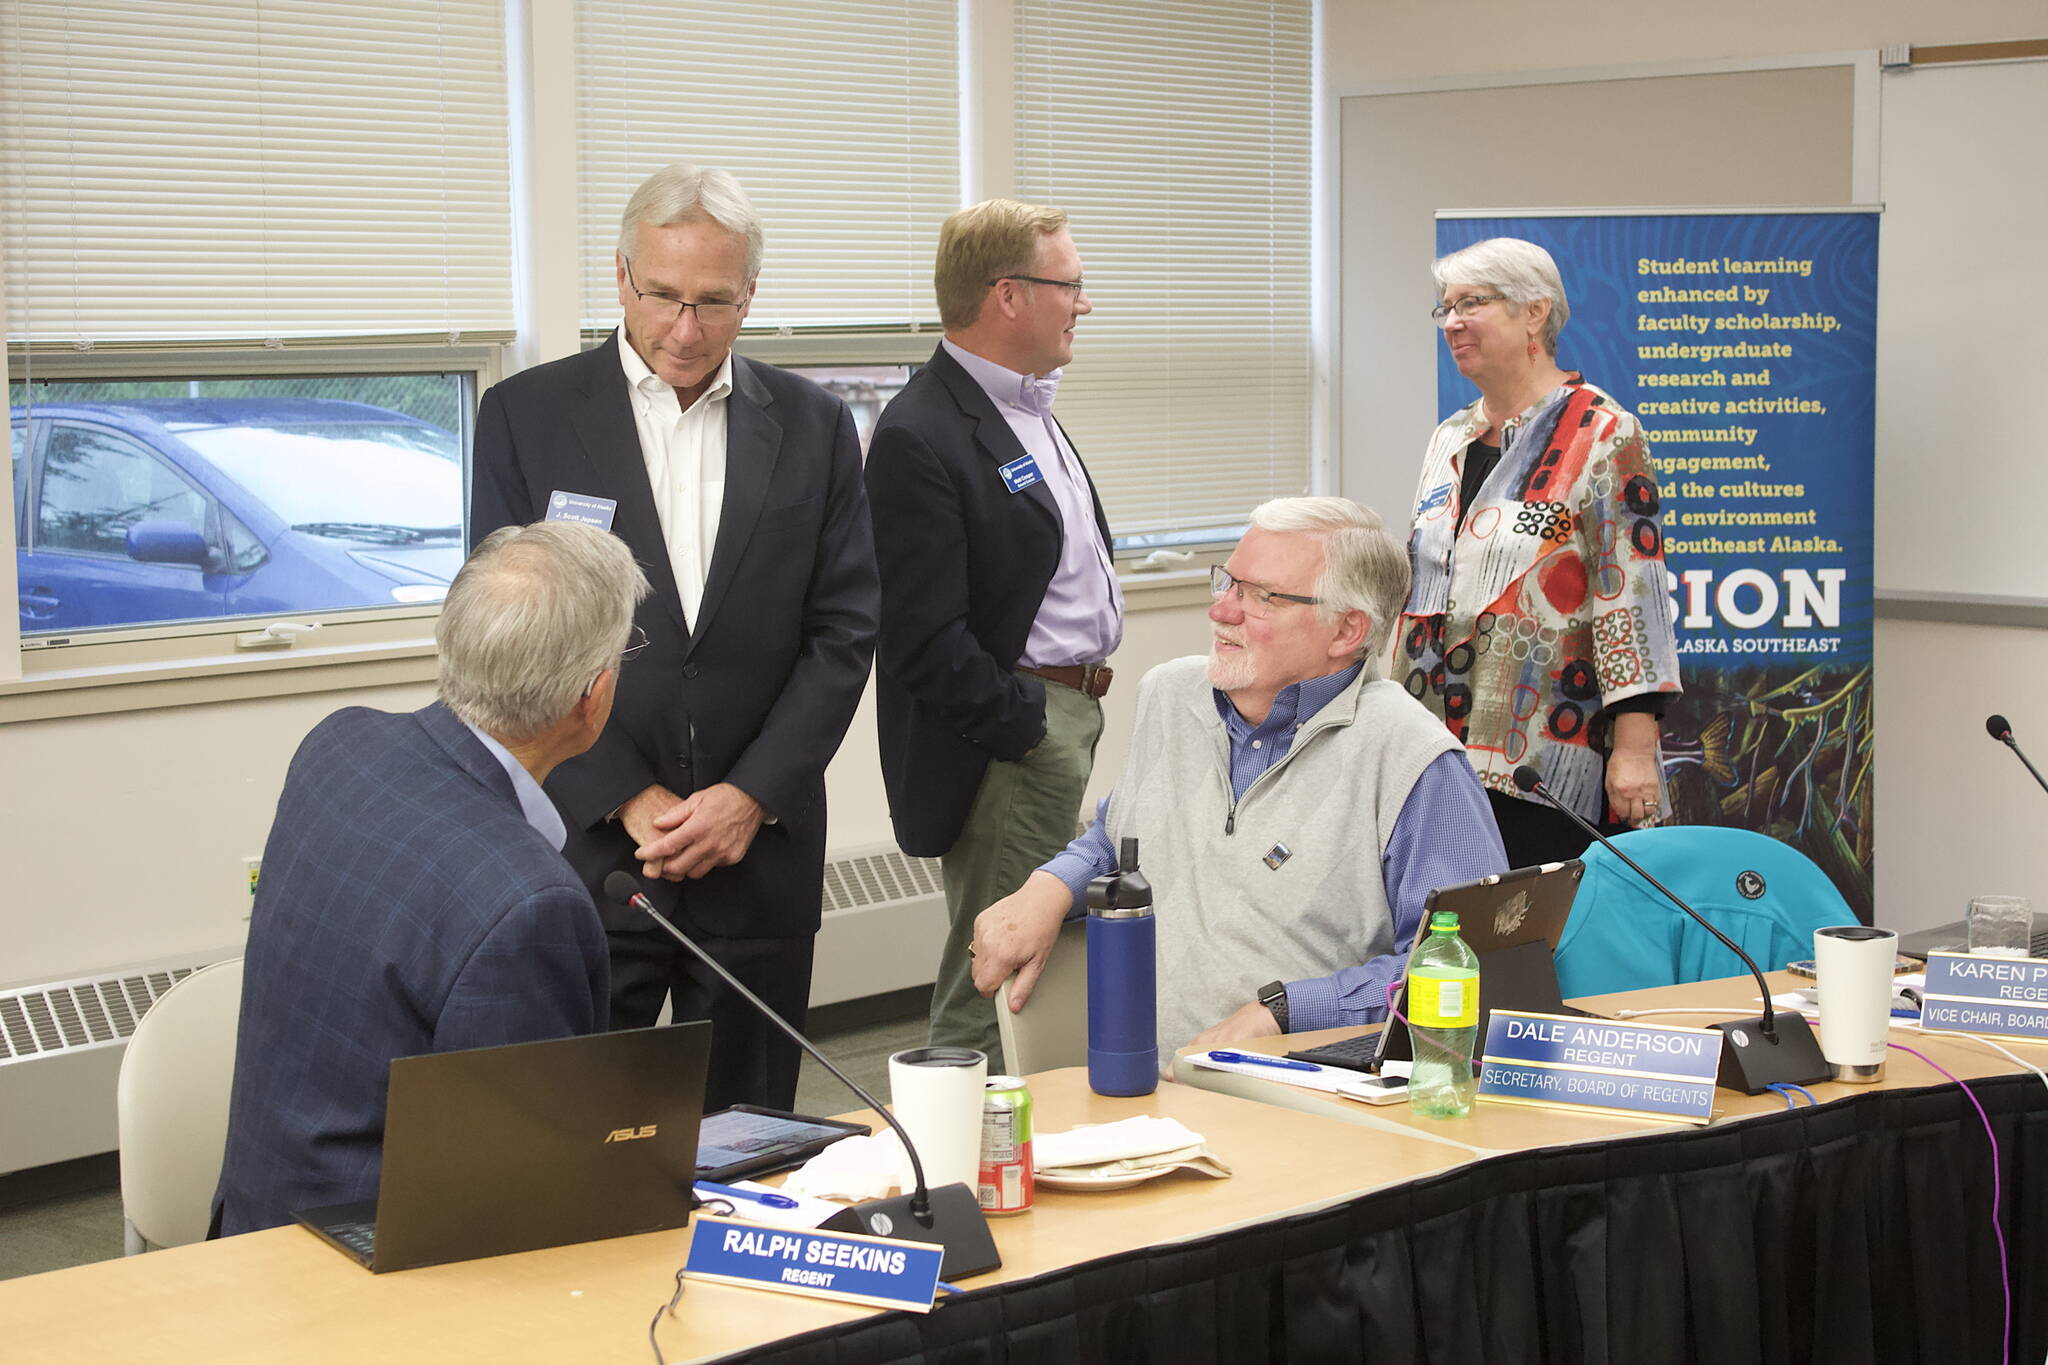 Members of the University of Alaska’s Board of Regents chat during a break in their meeting Thursday at the University of Alaska Southeast. (Mark Sabbatini / Juneau Empire)